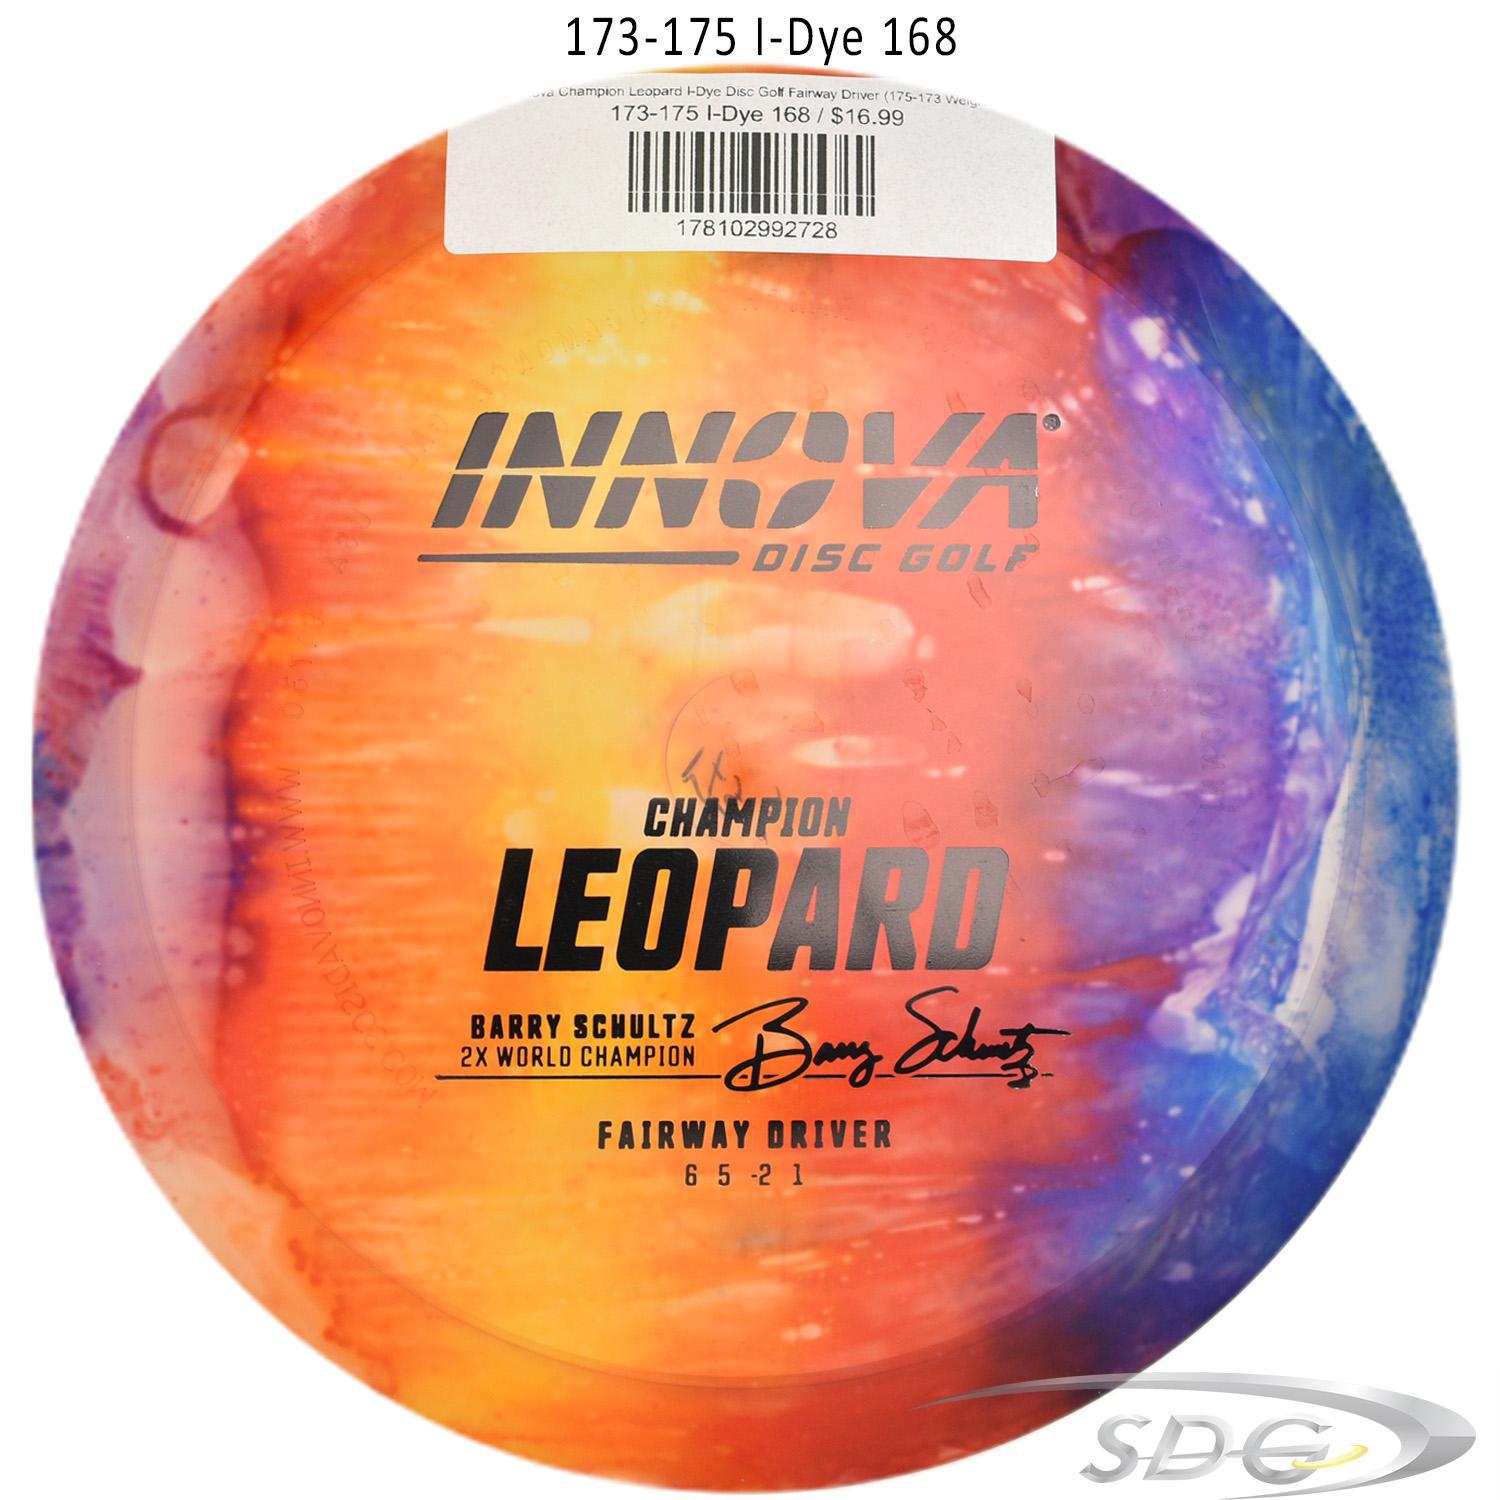 innova-champion-leopard-i-dye-disc-golf-fairway-driver 173-175 I-Dye 168 